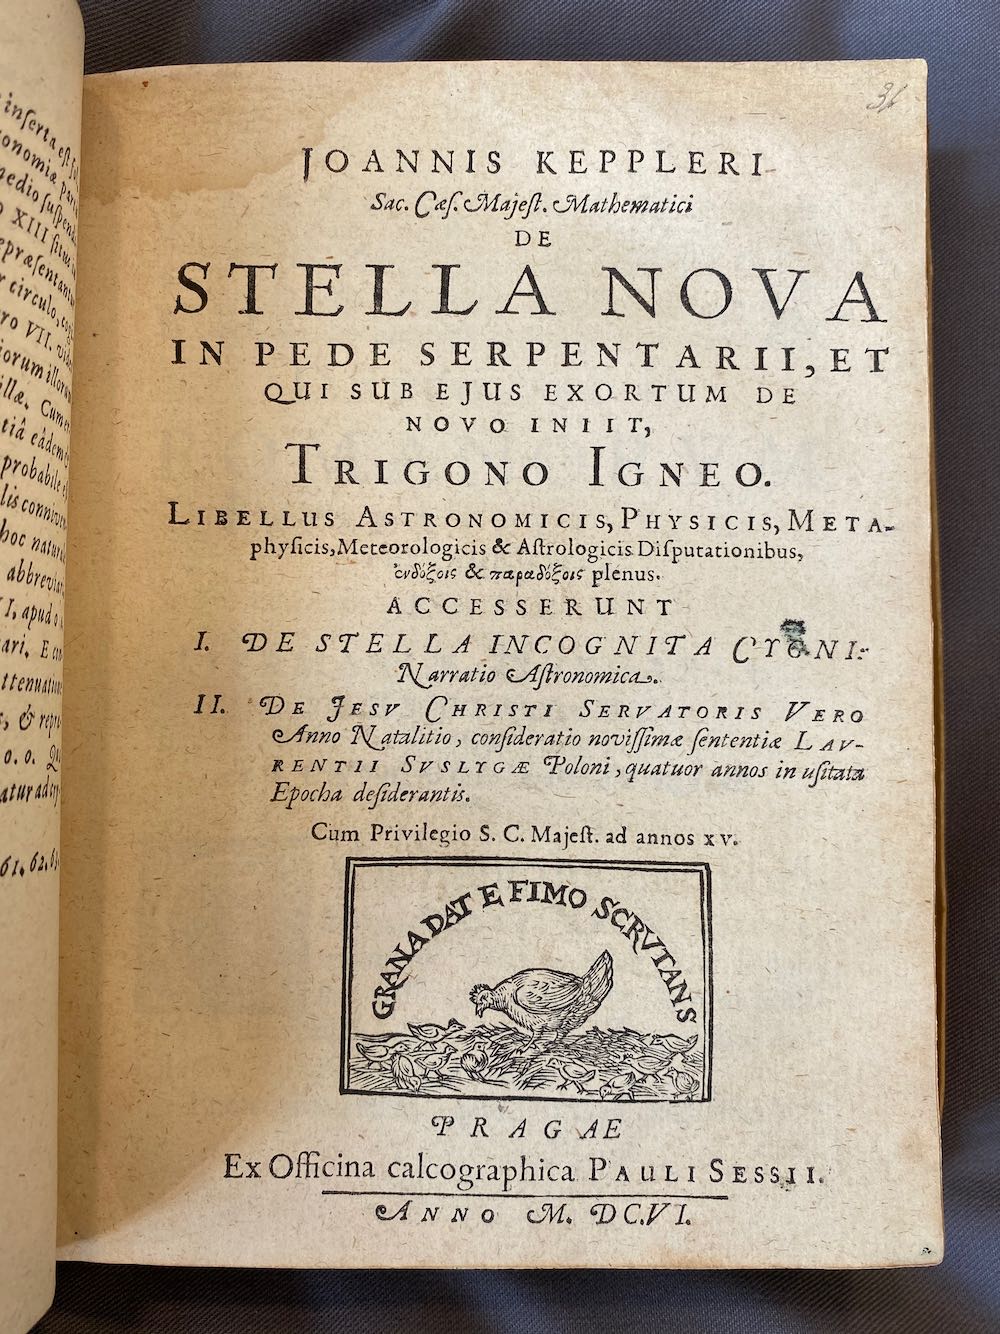 Je bekijkt nu Stella Nova – 1606 INGEZIEN